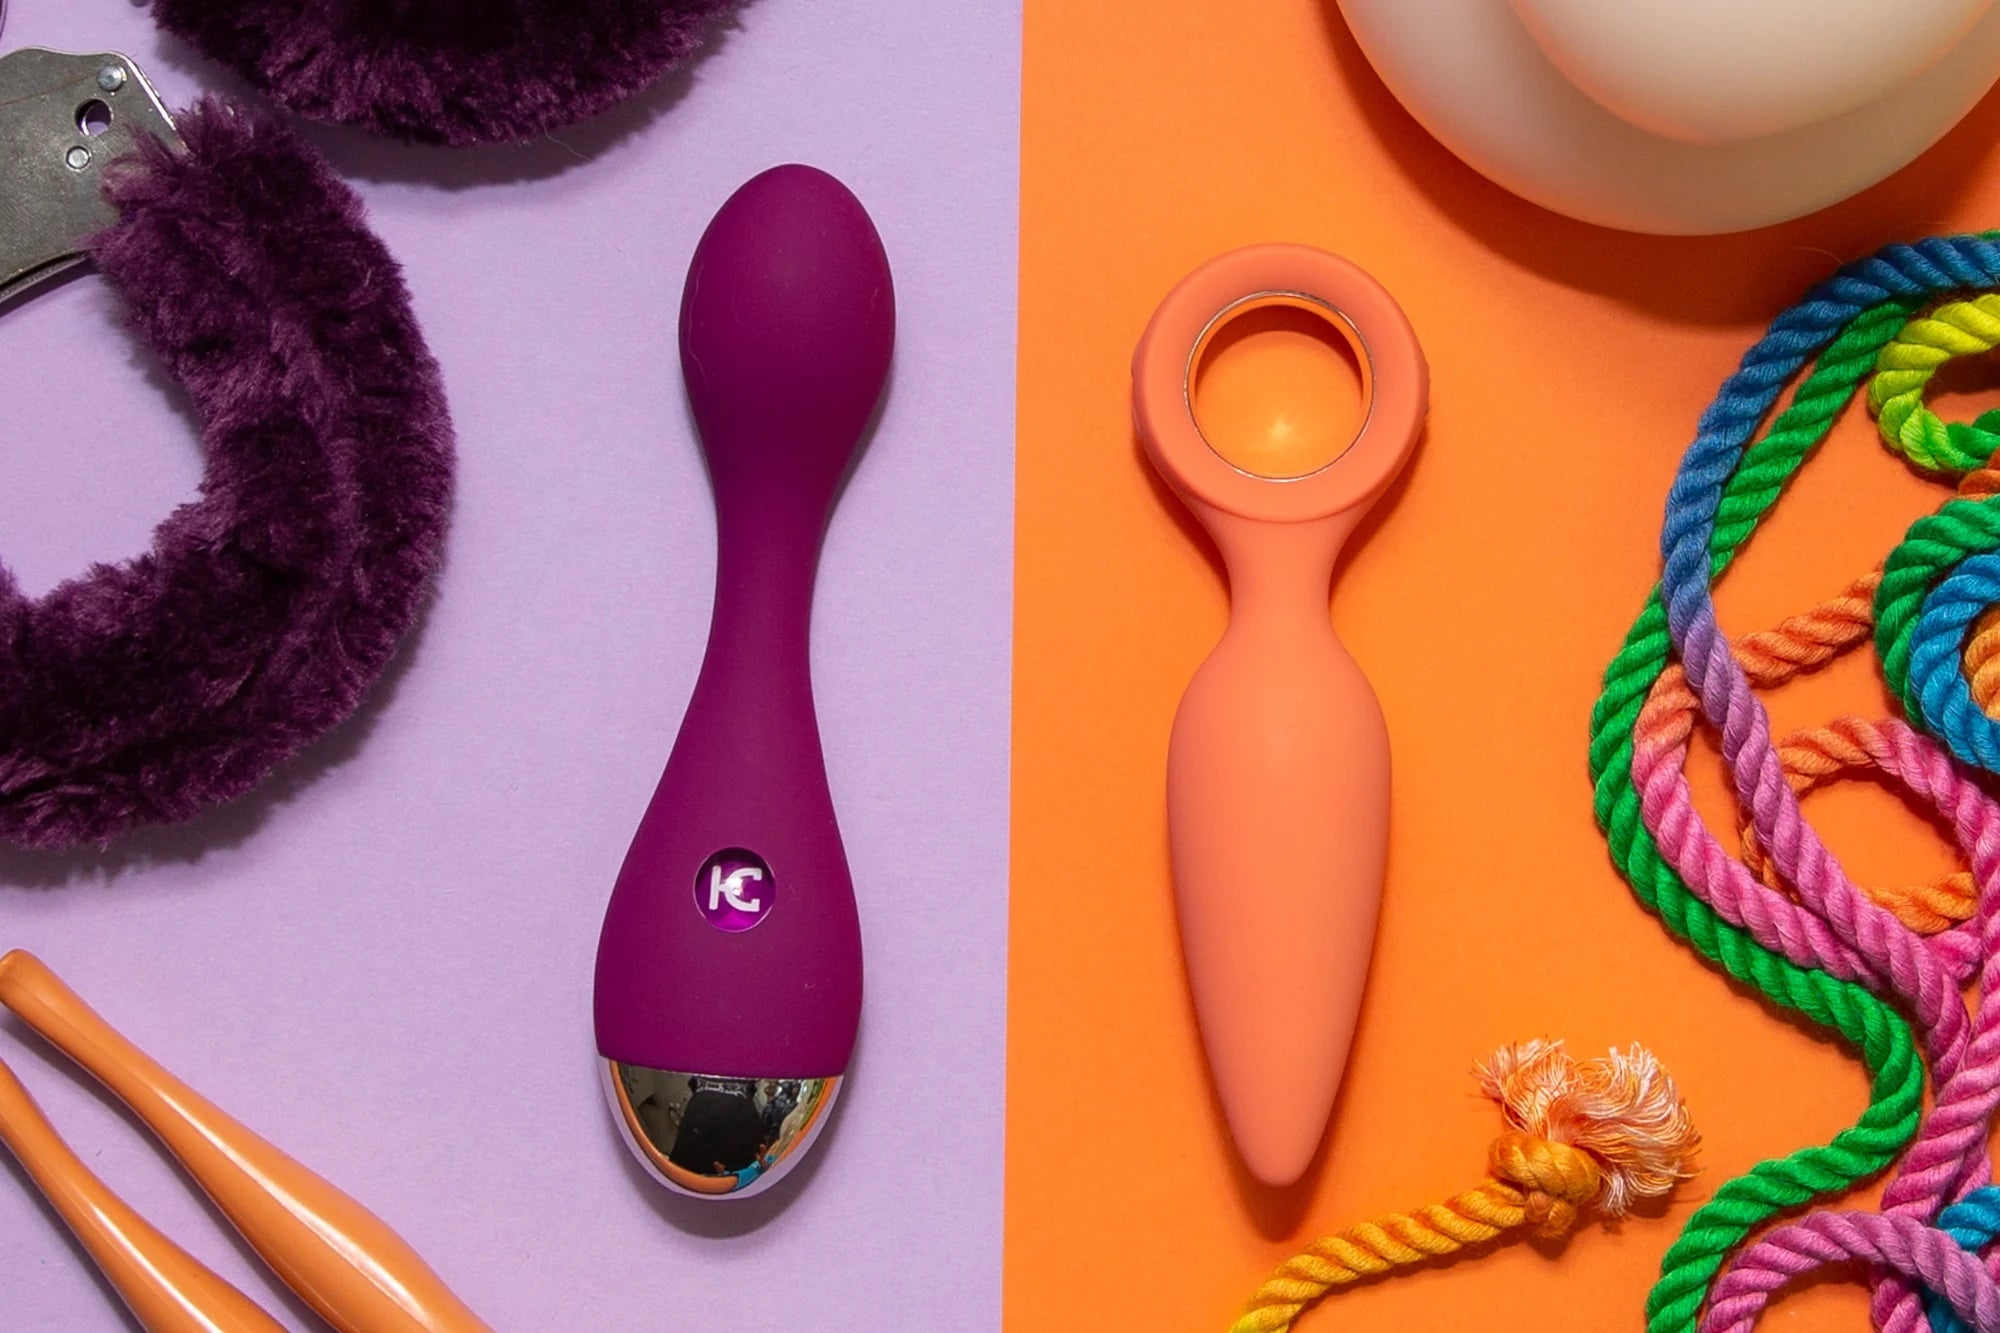 An array of sex toys in a flatlay